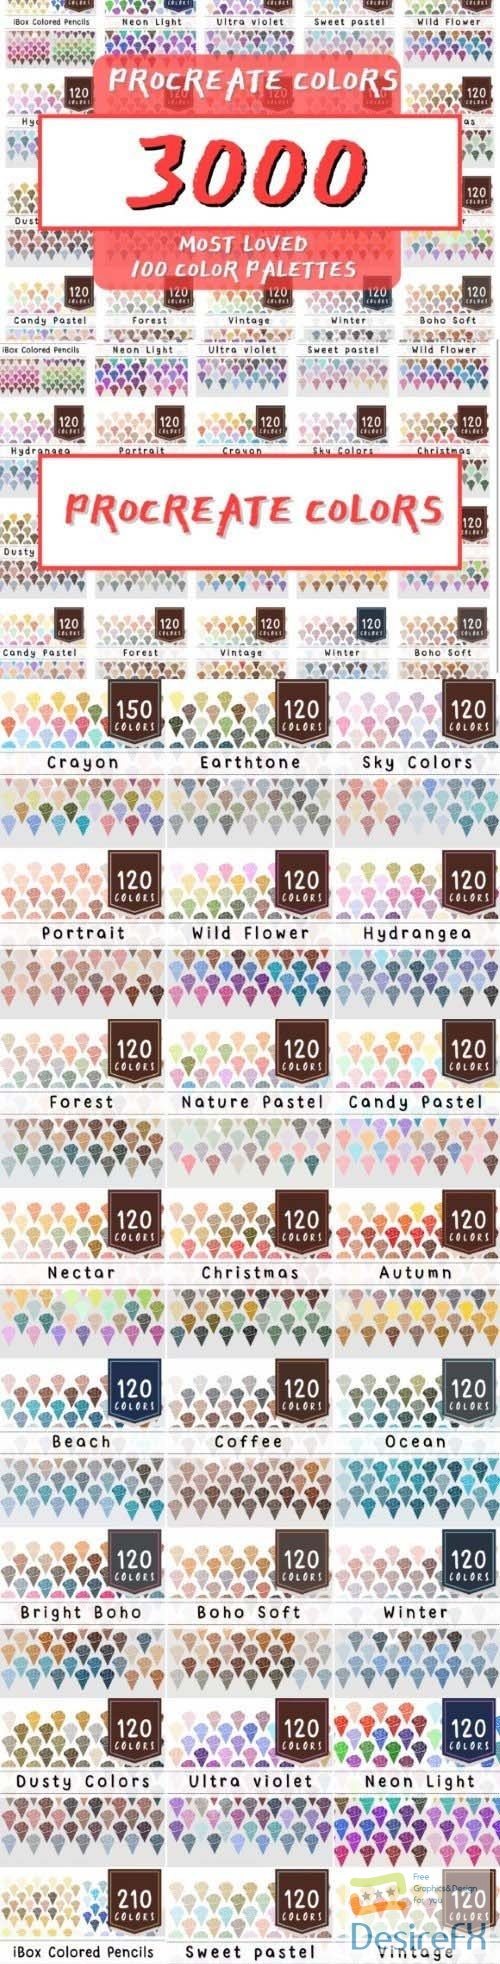 Color Bundle - 3000 Procreate Colors